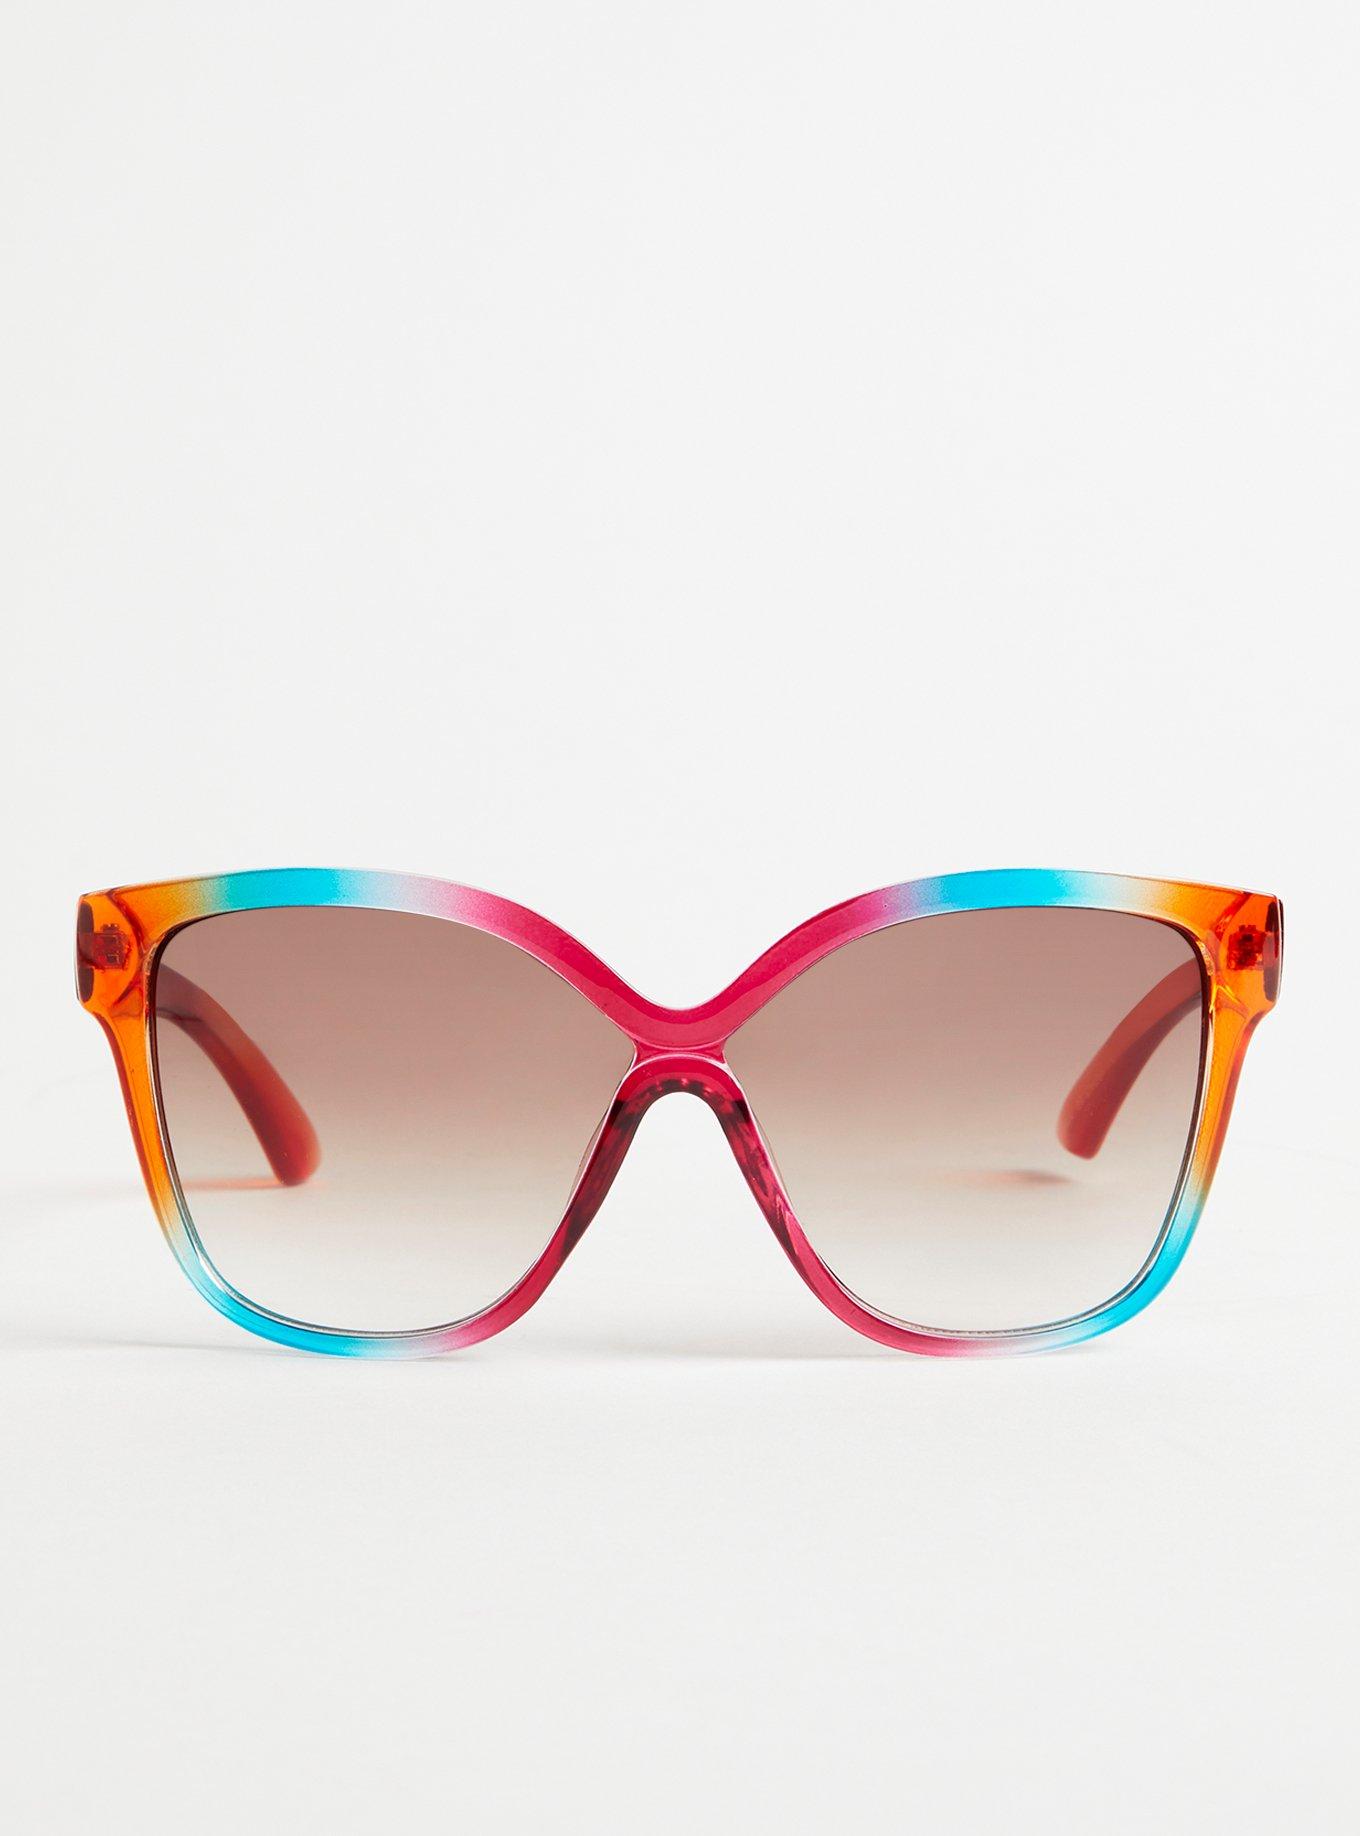 Over The Edge Cat Eye Sunglasses - Red, Fashion Nova, Sunglasses